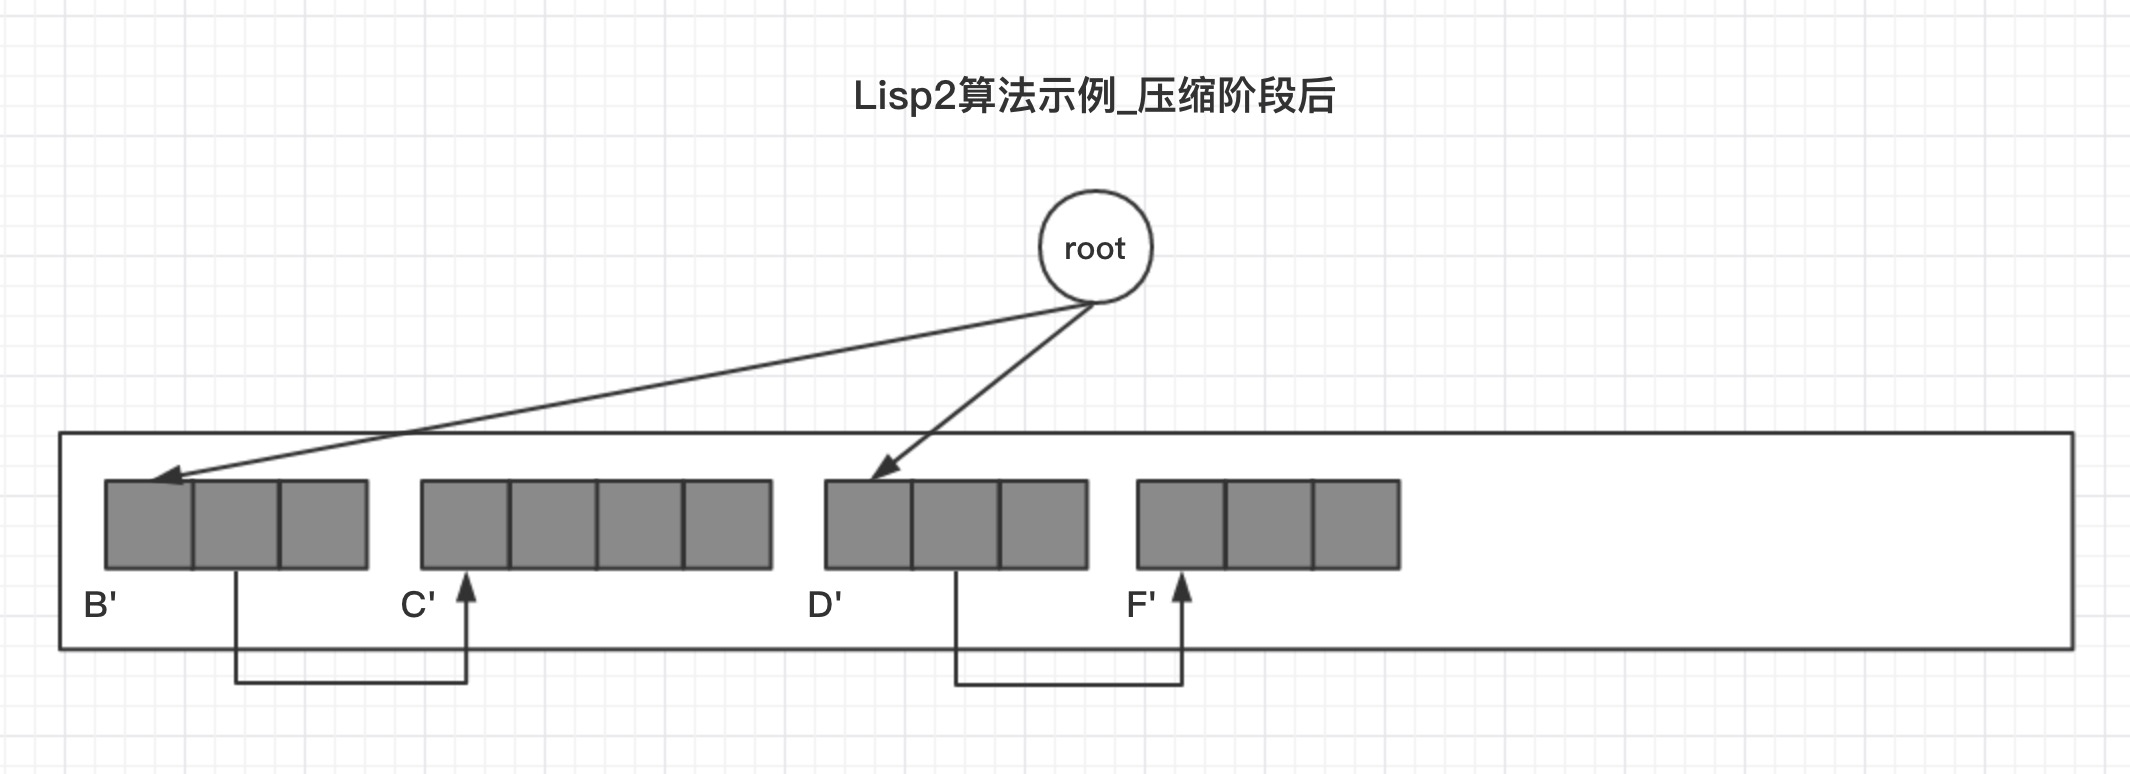 Lisp2算法示例_压缩阶段后